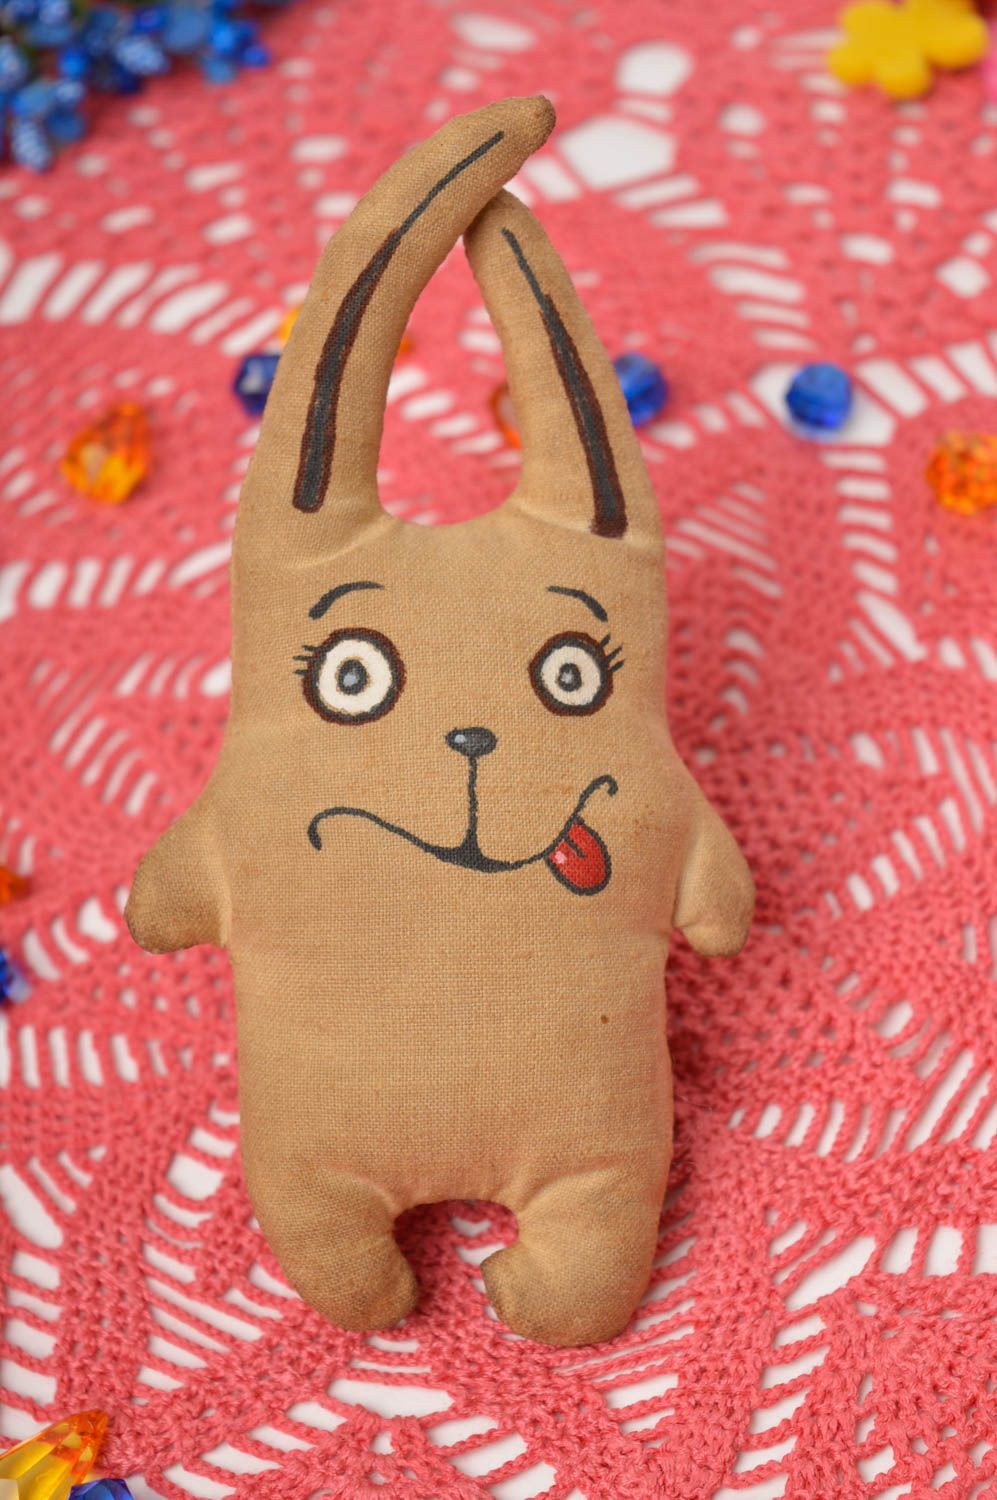 Handmade hare toy interesting cute home decor stylish designer accessories photo 1